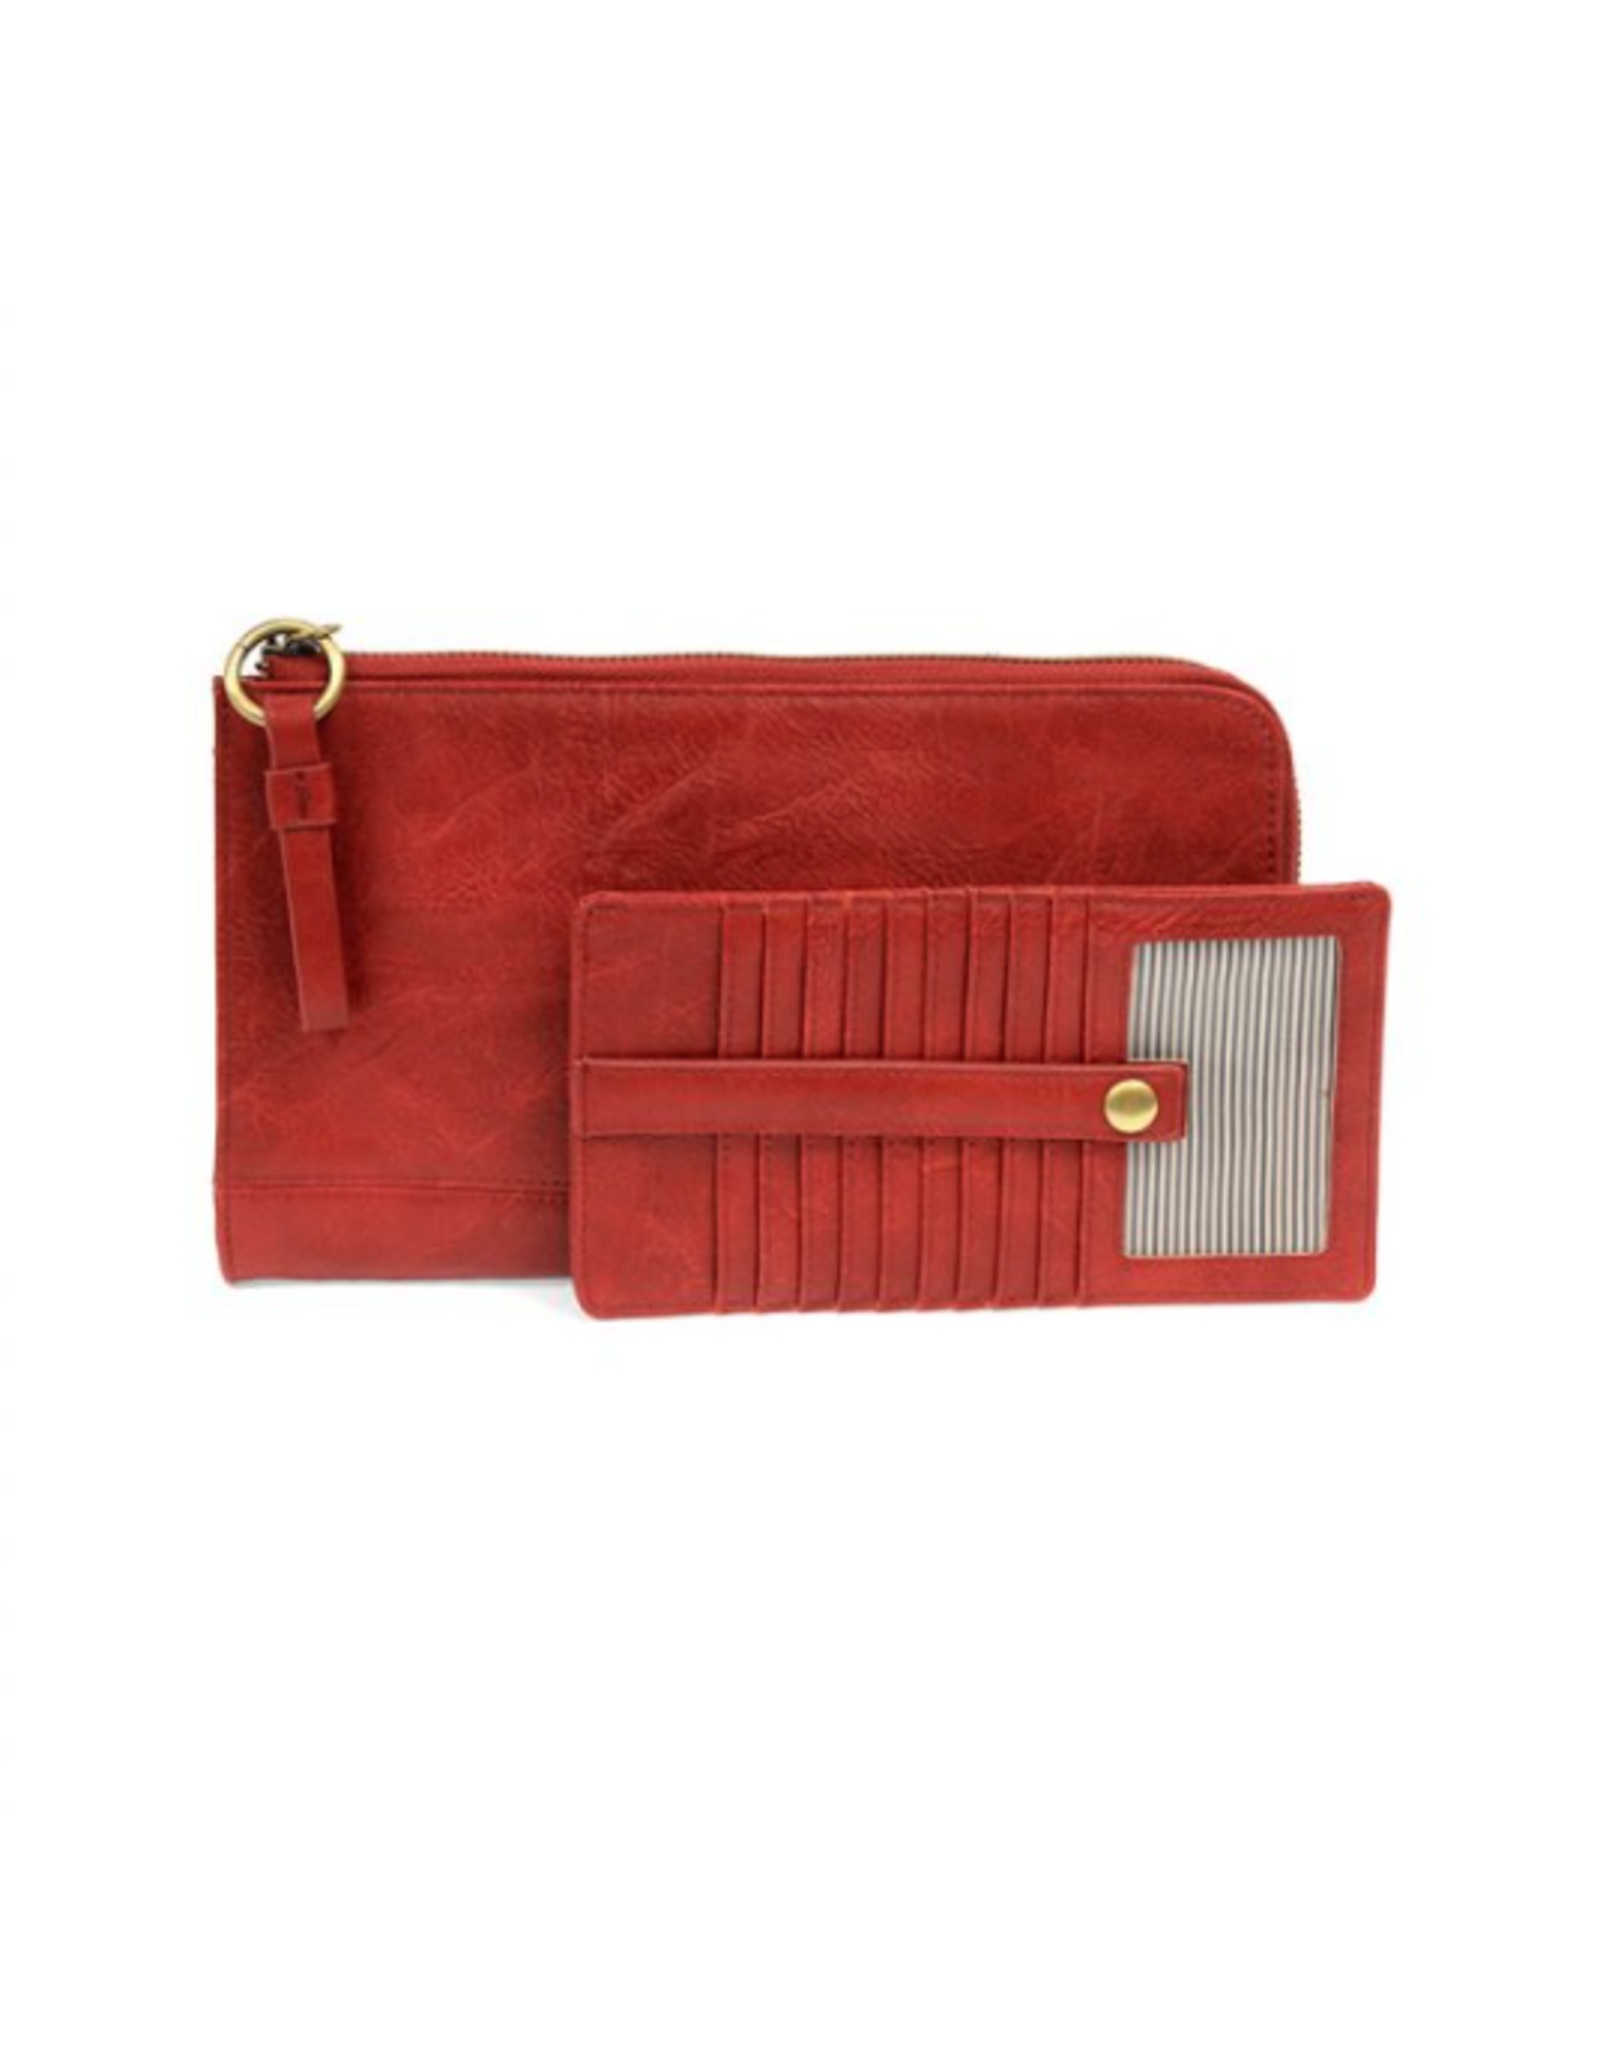 JS Karina Convertible Wristlet and Wallet, red